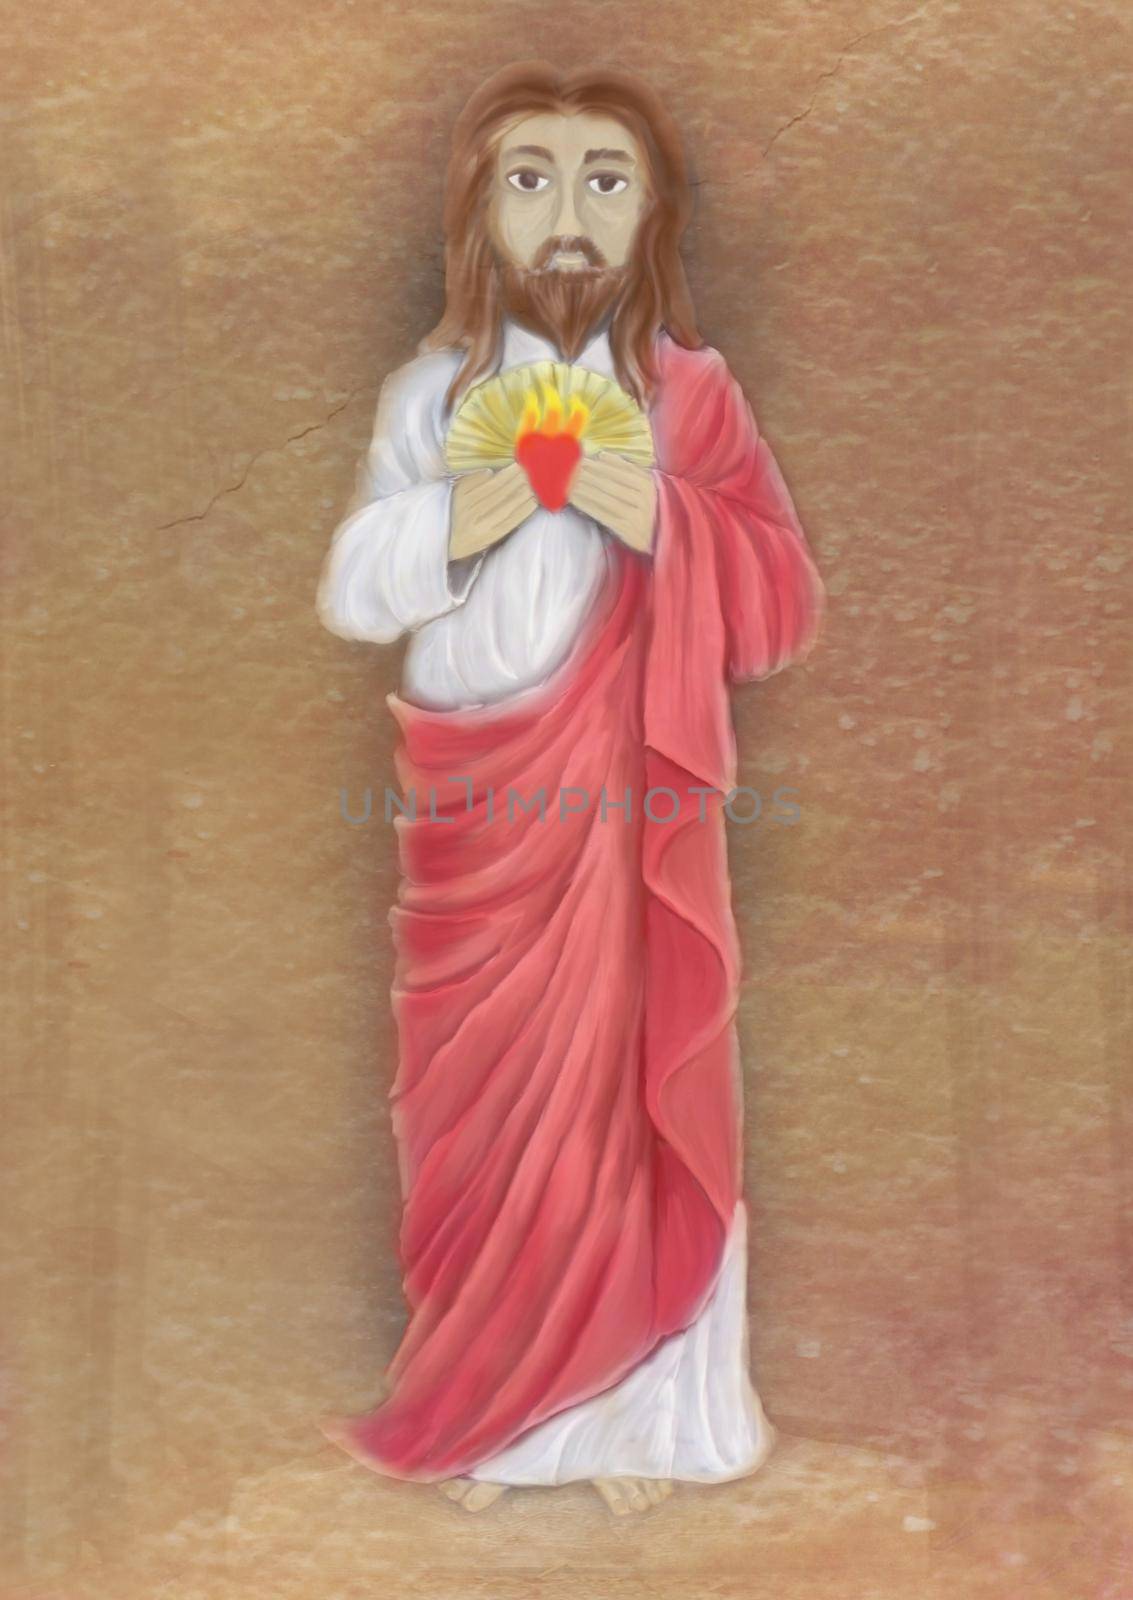 Sacred Heart of Jesus illustration